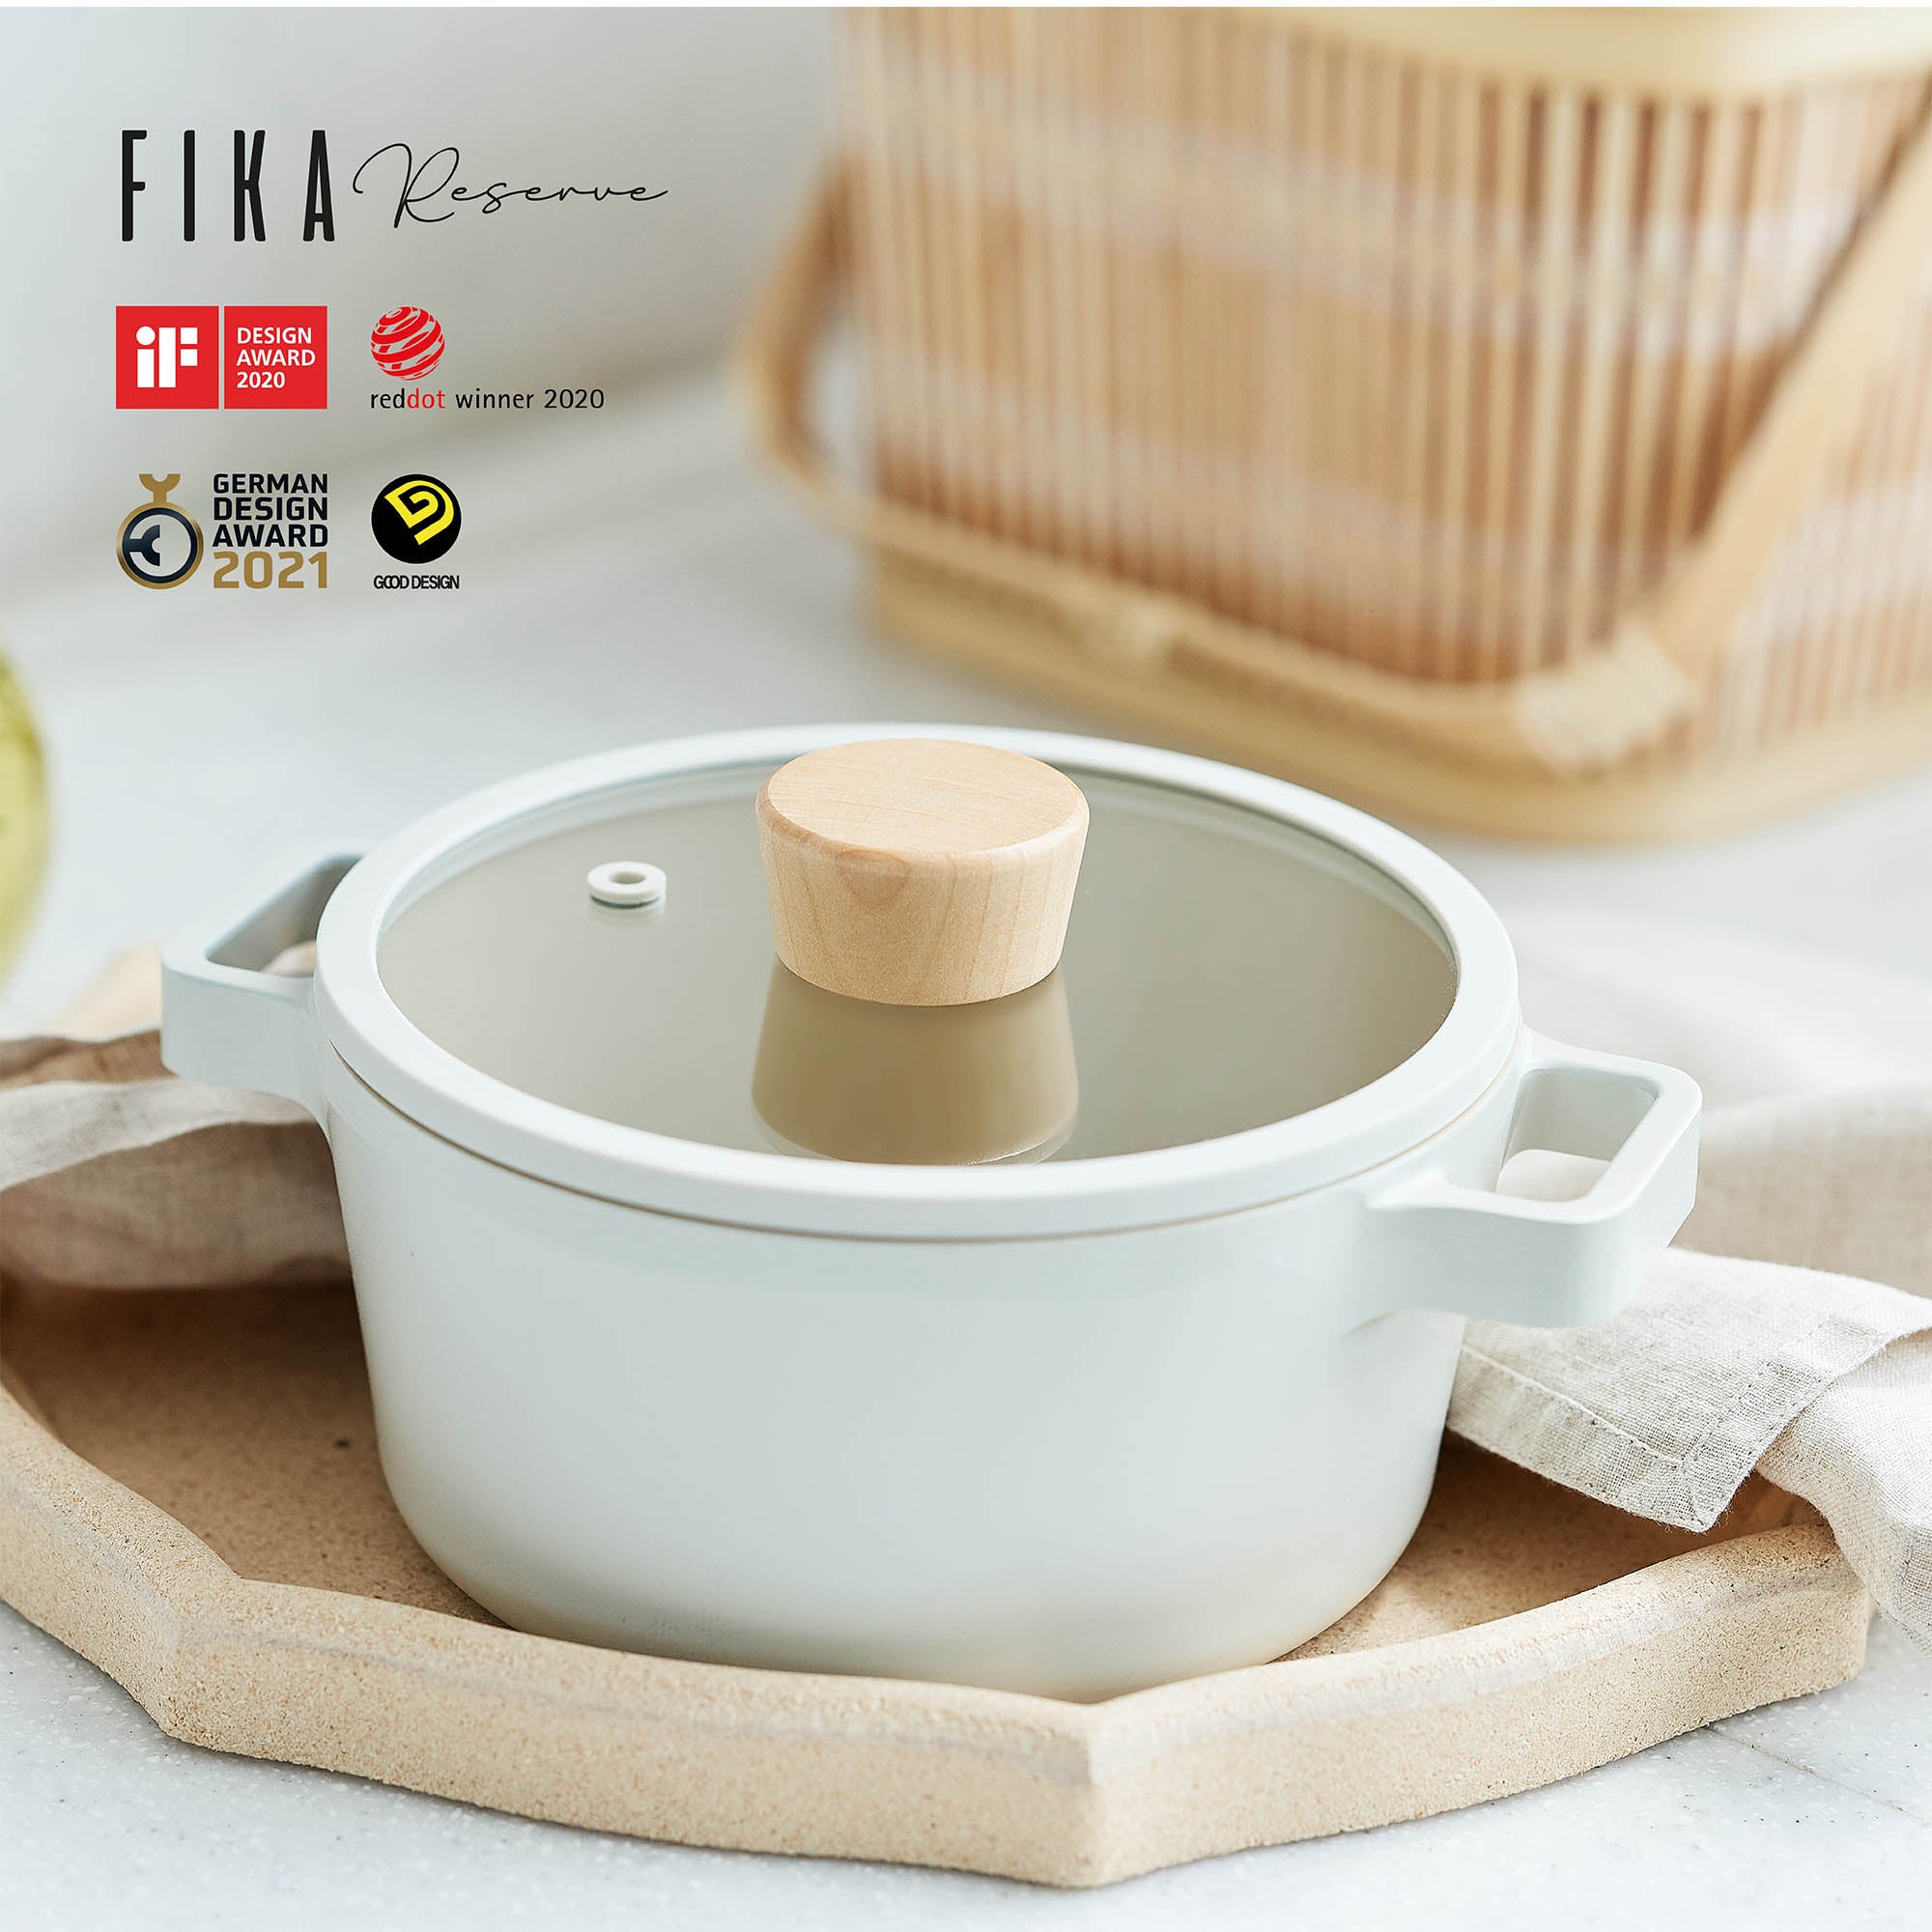 Neoflam] Fika Cookwares Original frying pan wok casserole Collection Series